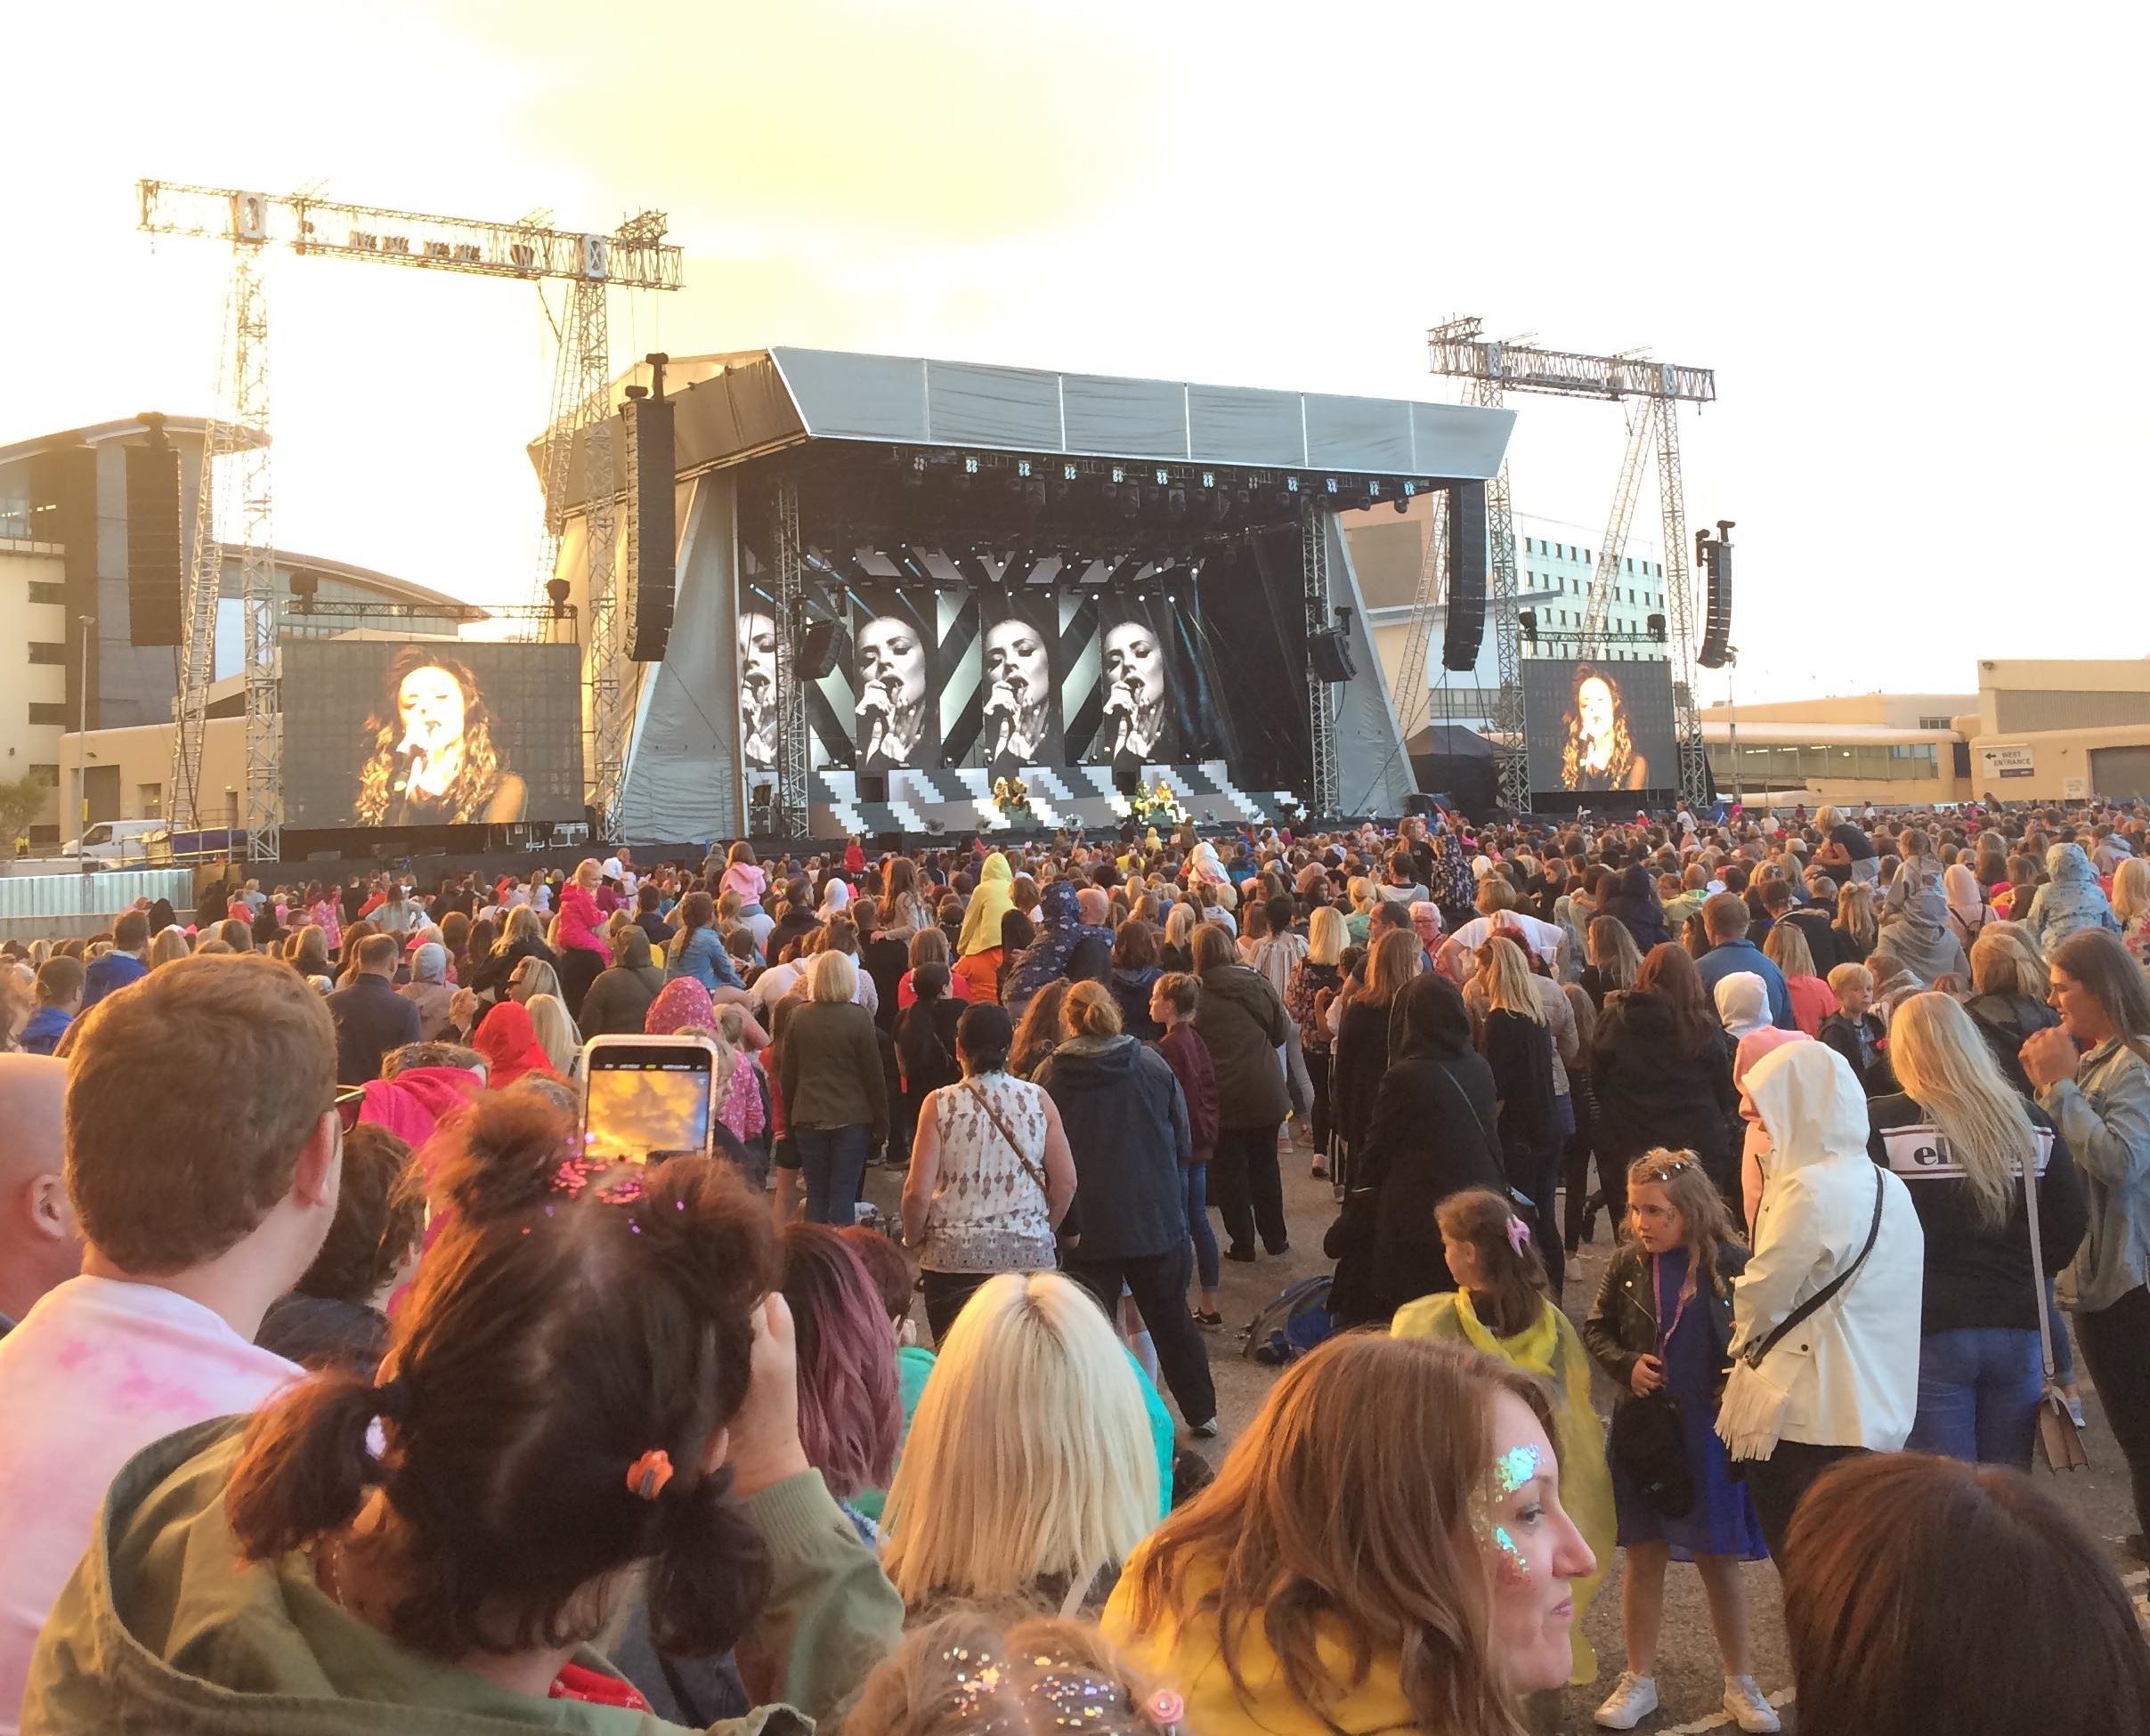 Little Mix played an outdoor concert in Aberdeen last year